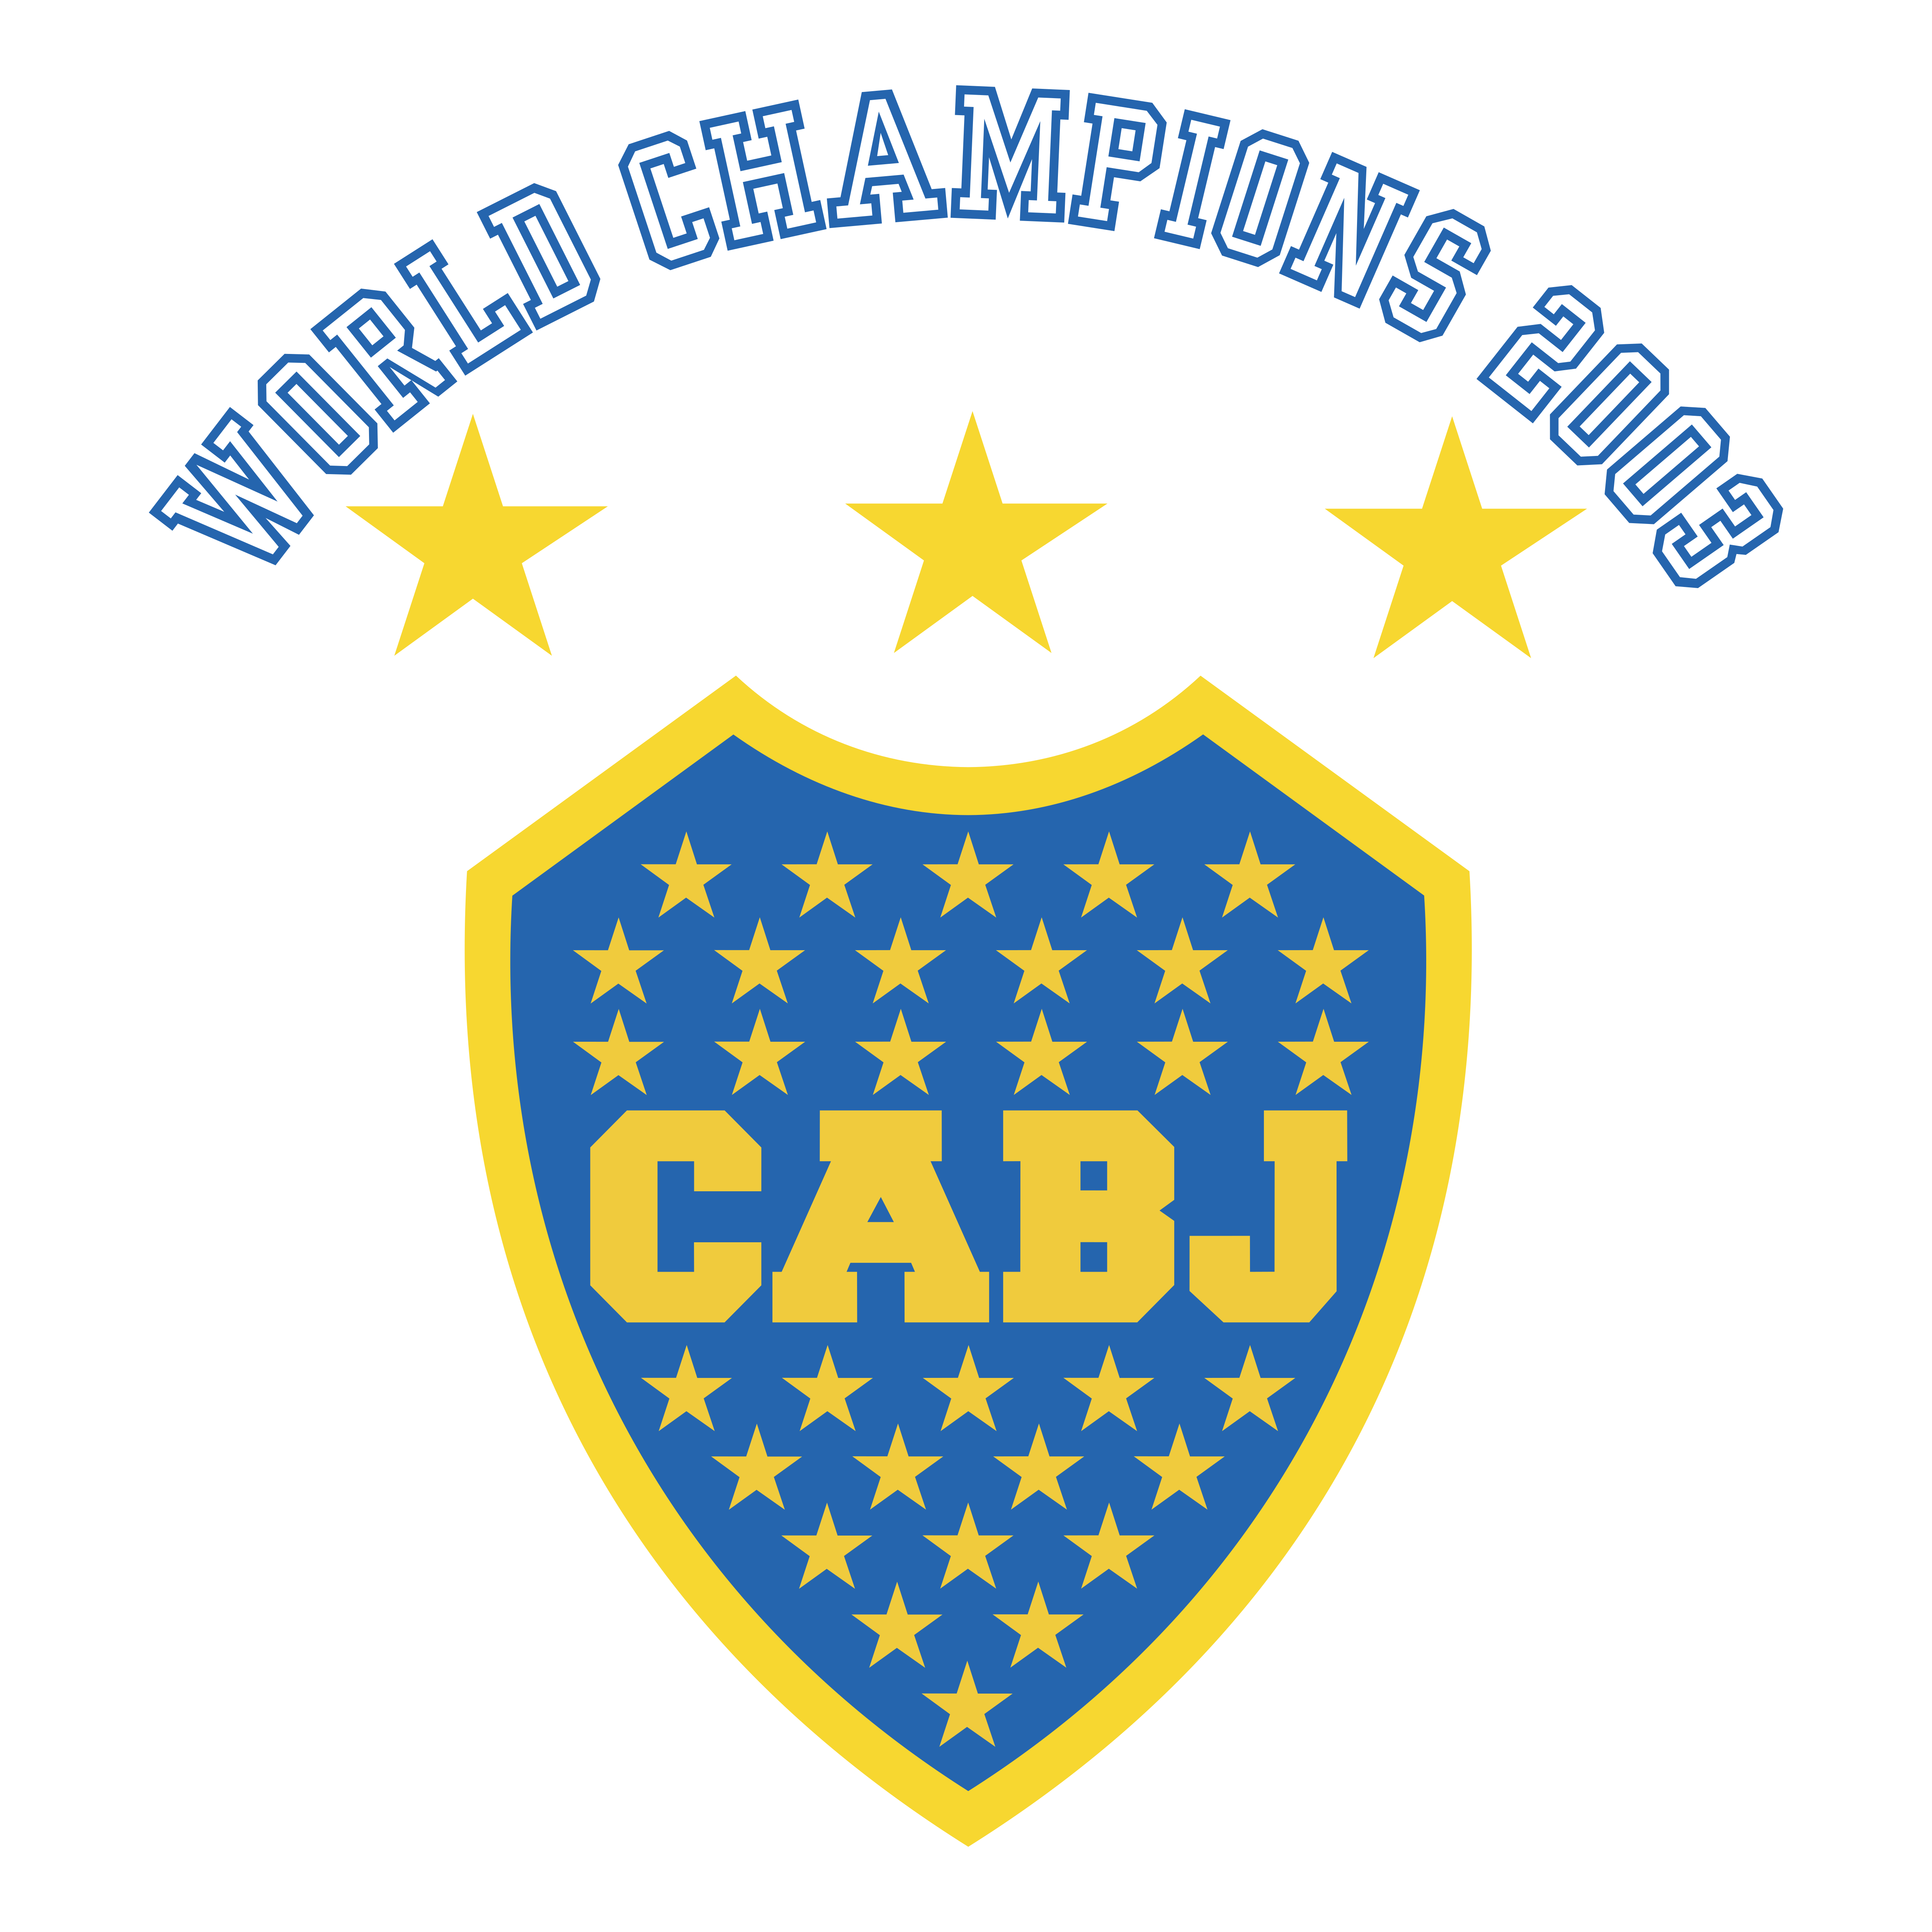 Cabj Logo - Club Atletico Boca Juniors – Logos Download